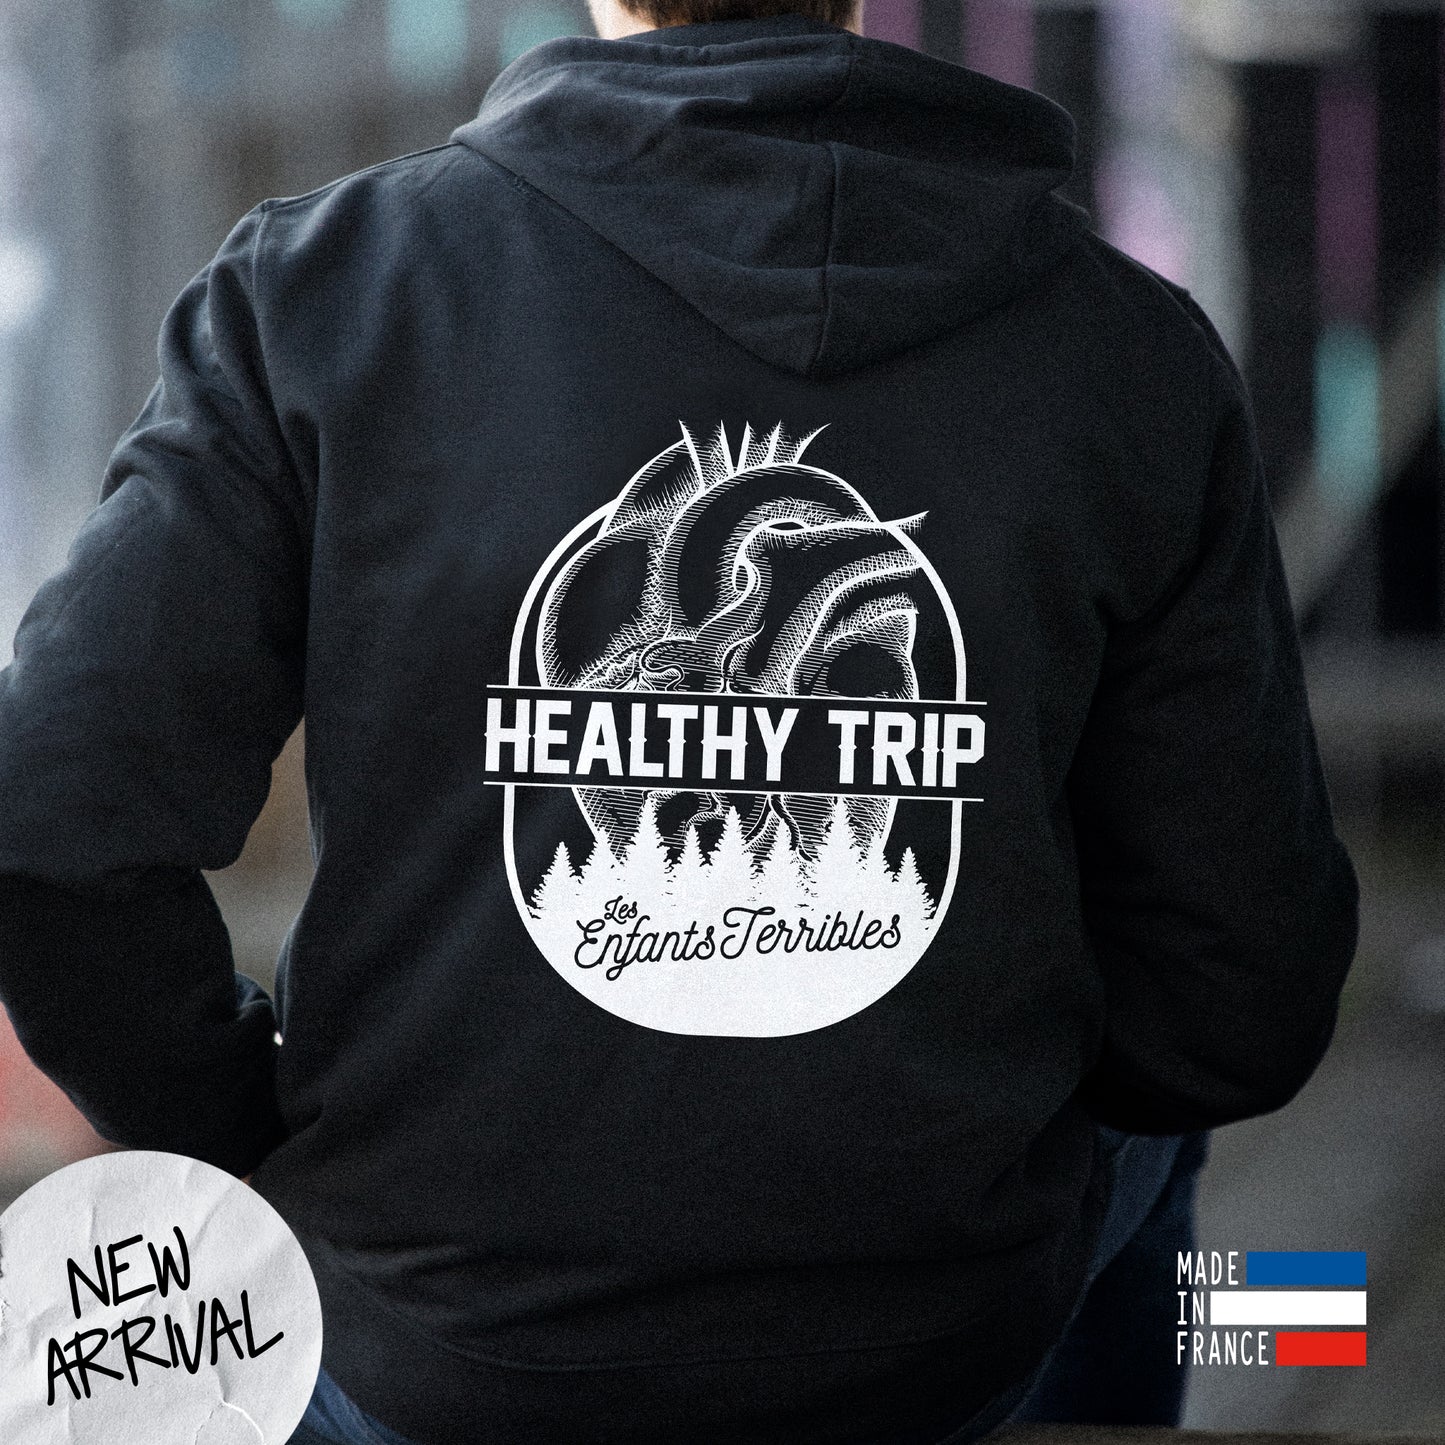 Black unisex hoodie with message "Healthy trip"